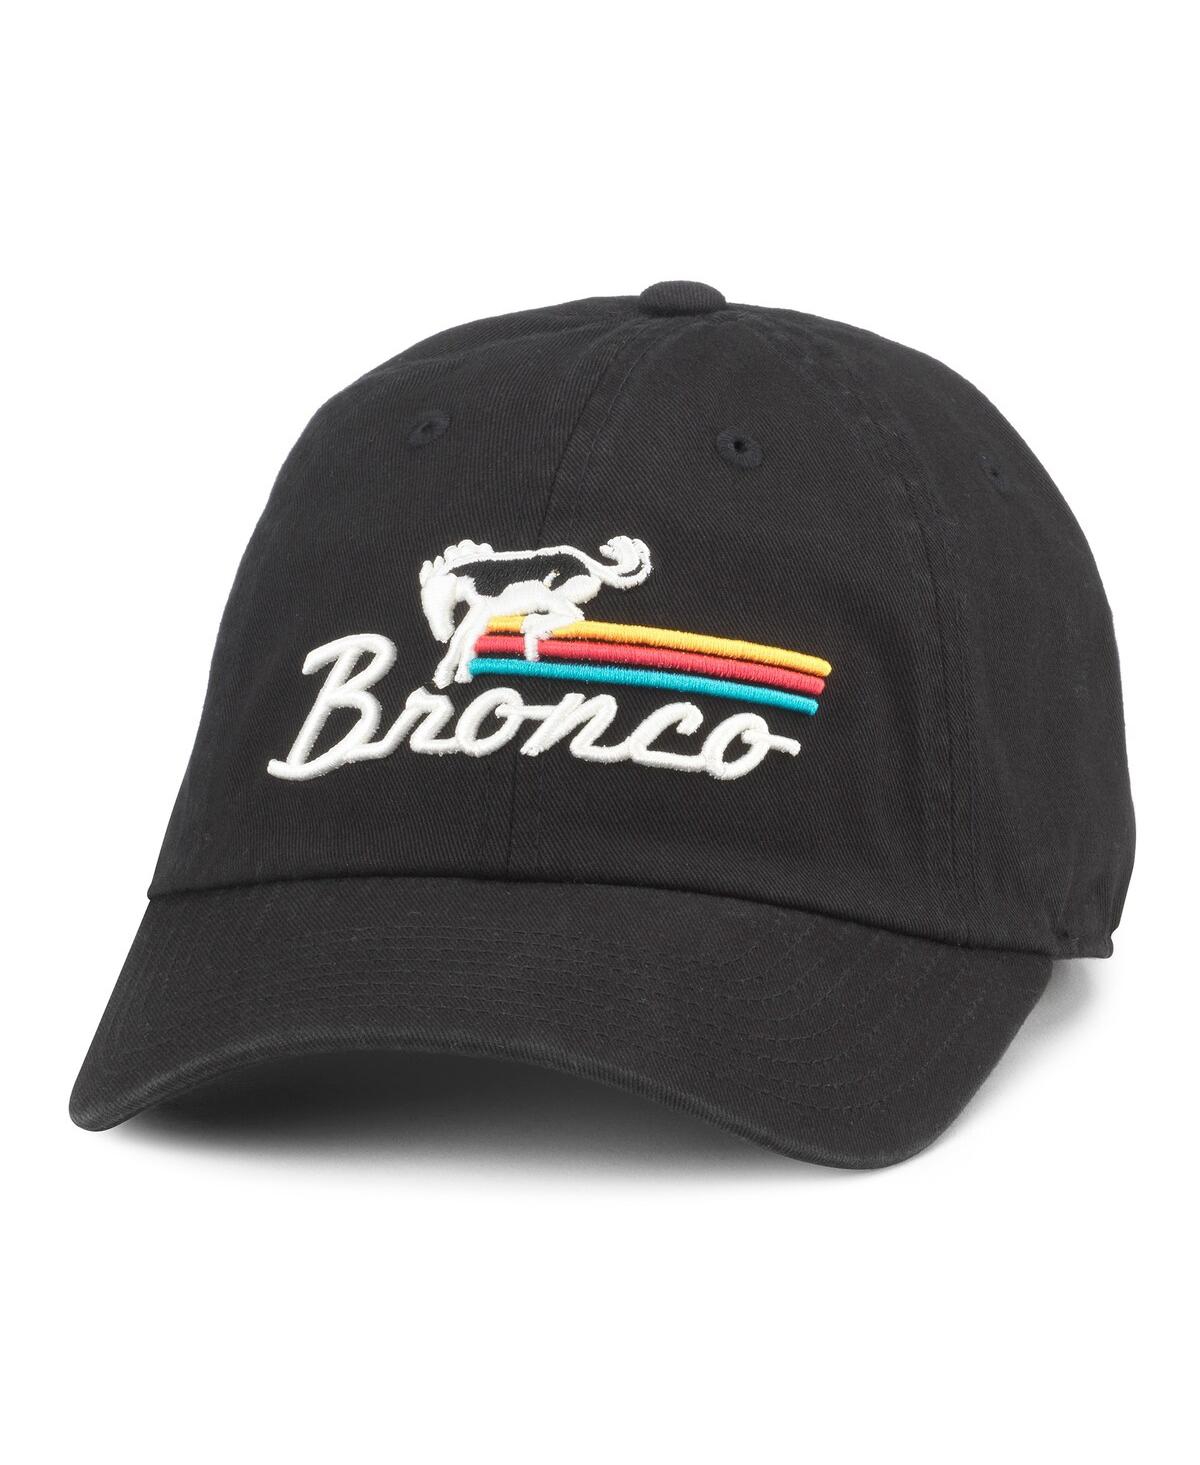 Men's and Women's American Needle Black Ford Bronco Ballpark Adjustable Hat - Black